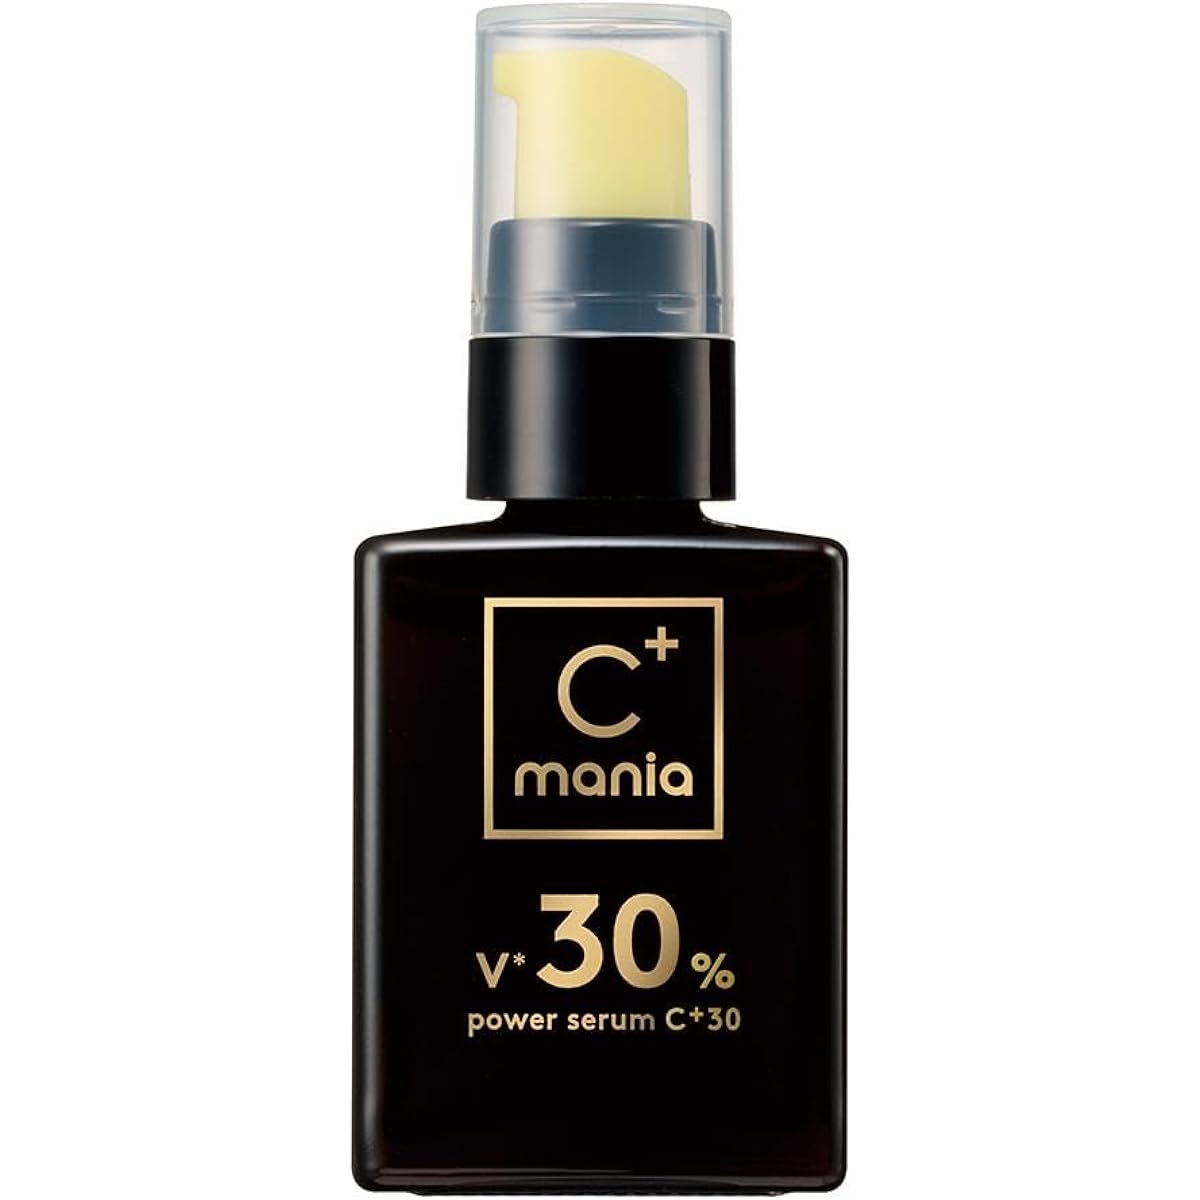 C+mania Power Serum C+30 Serum Super Vitamin C+ 20mL (approx. 1 month supply)